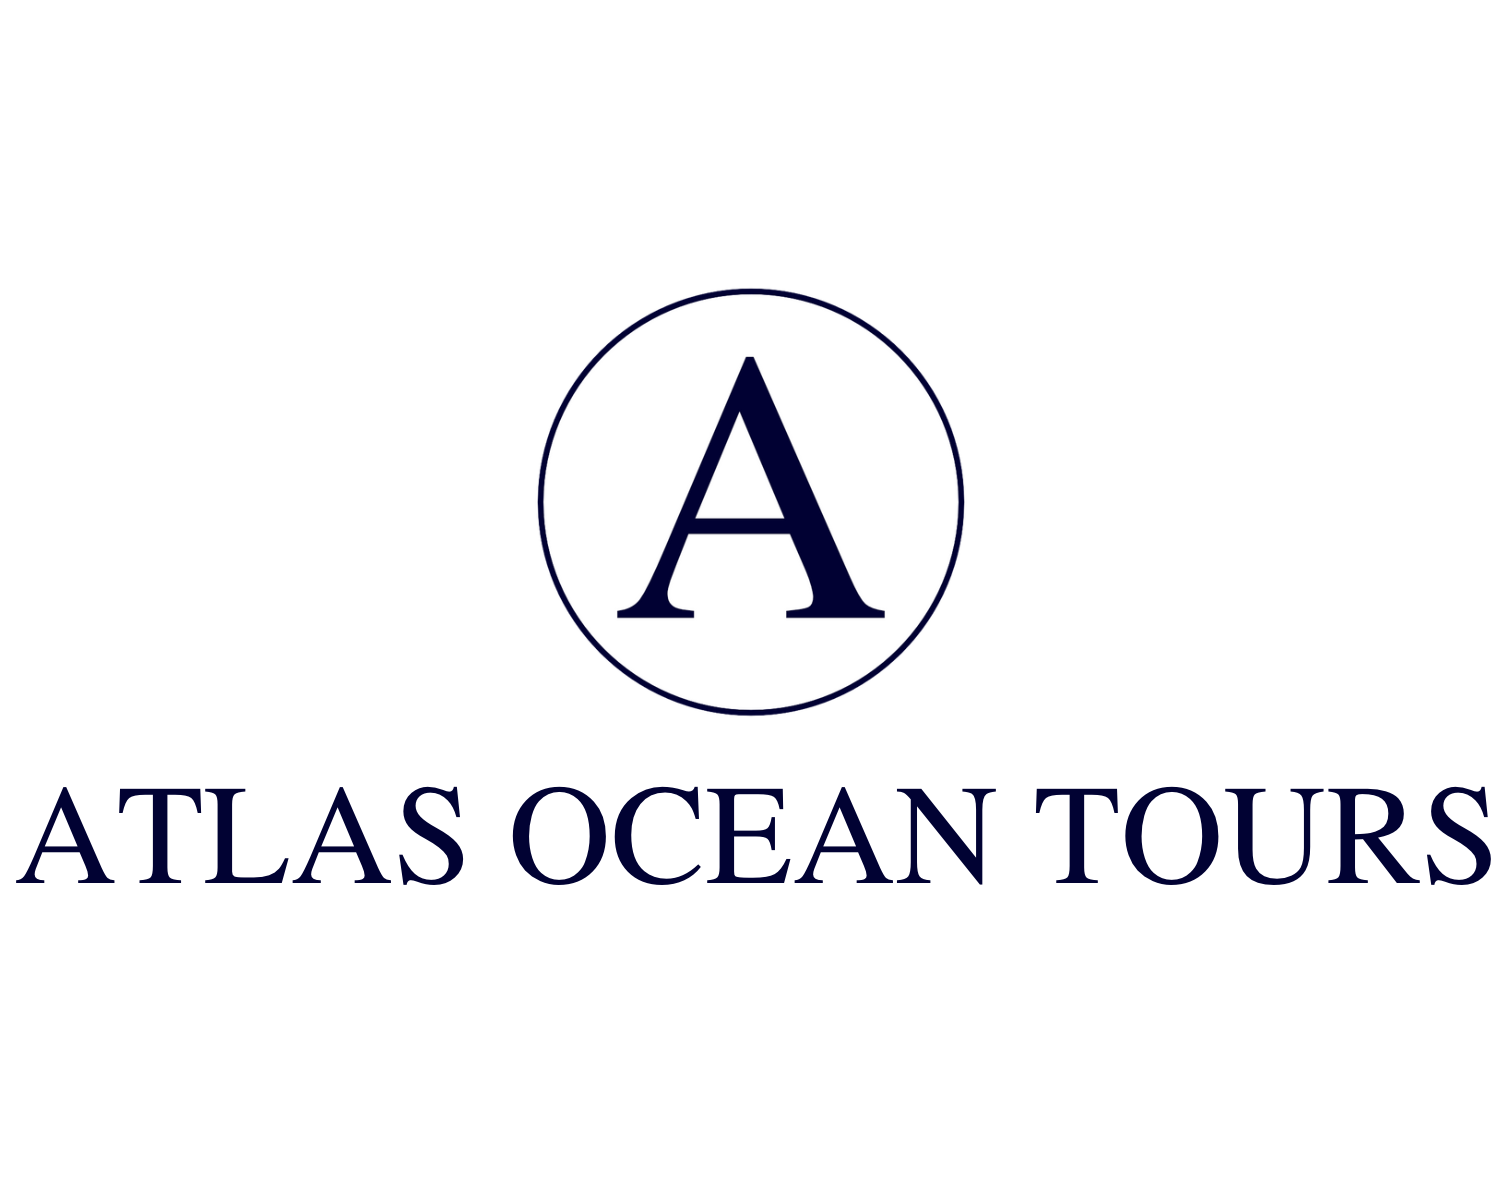 Atlas Ocean Tours in Haida Gwaii